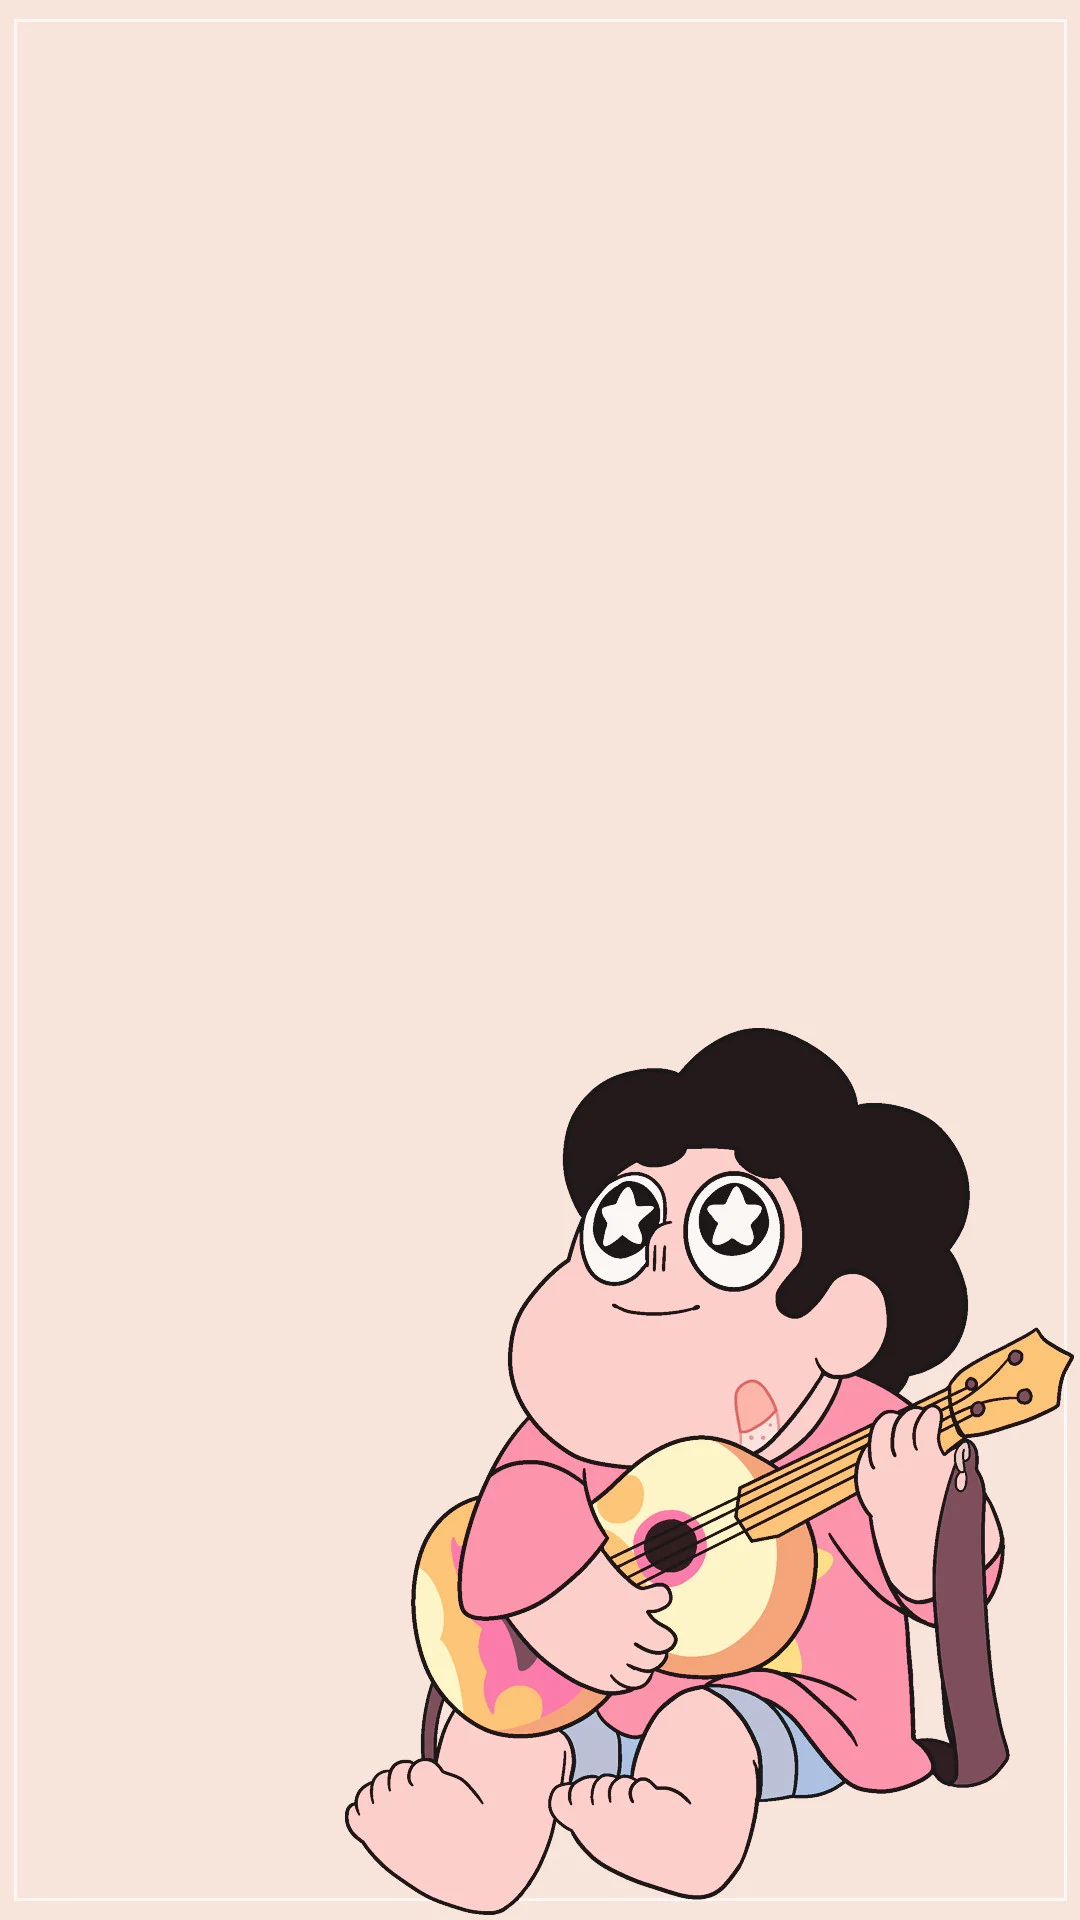 Steven universe wallpaper Tumblr